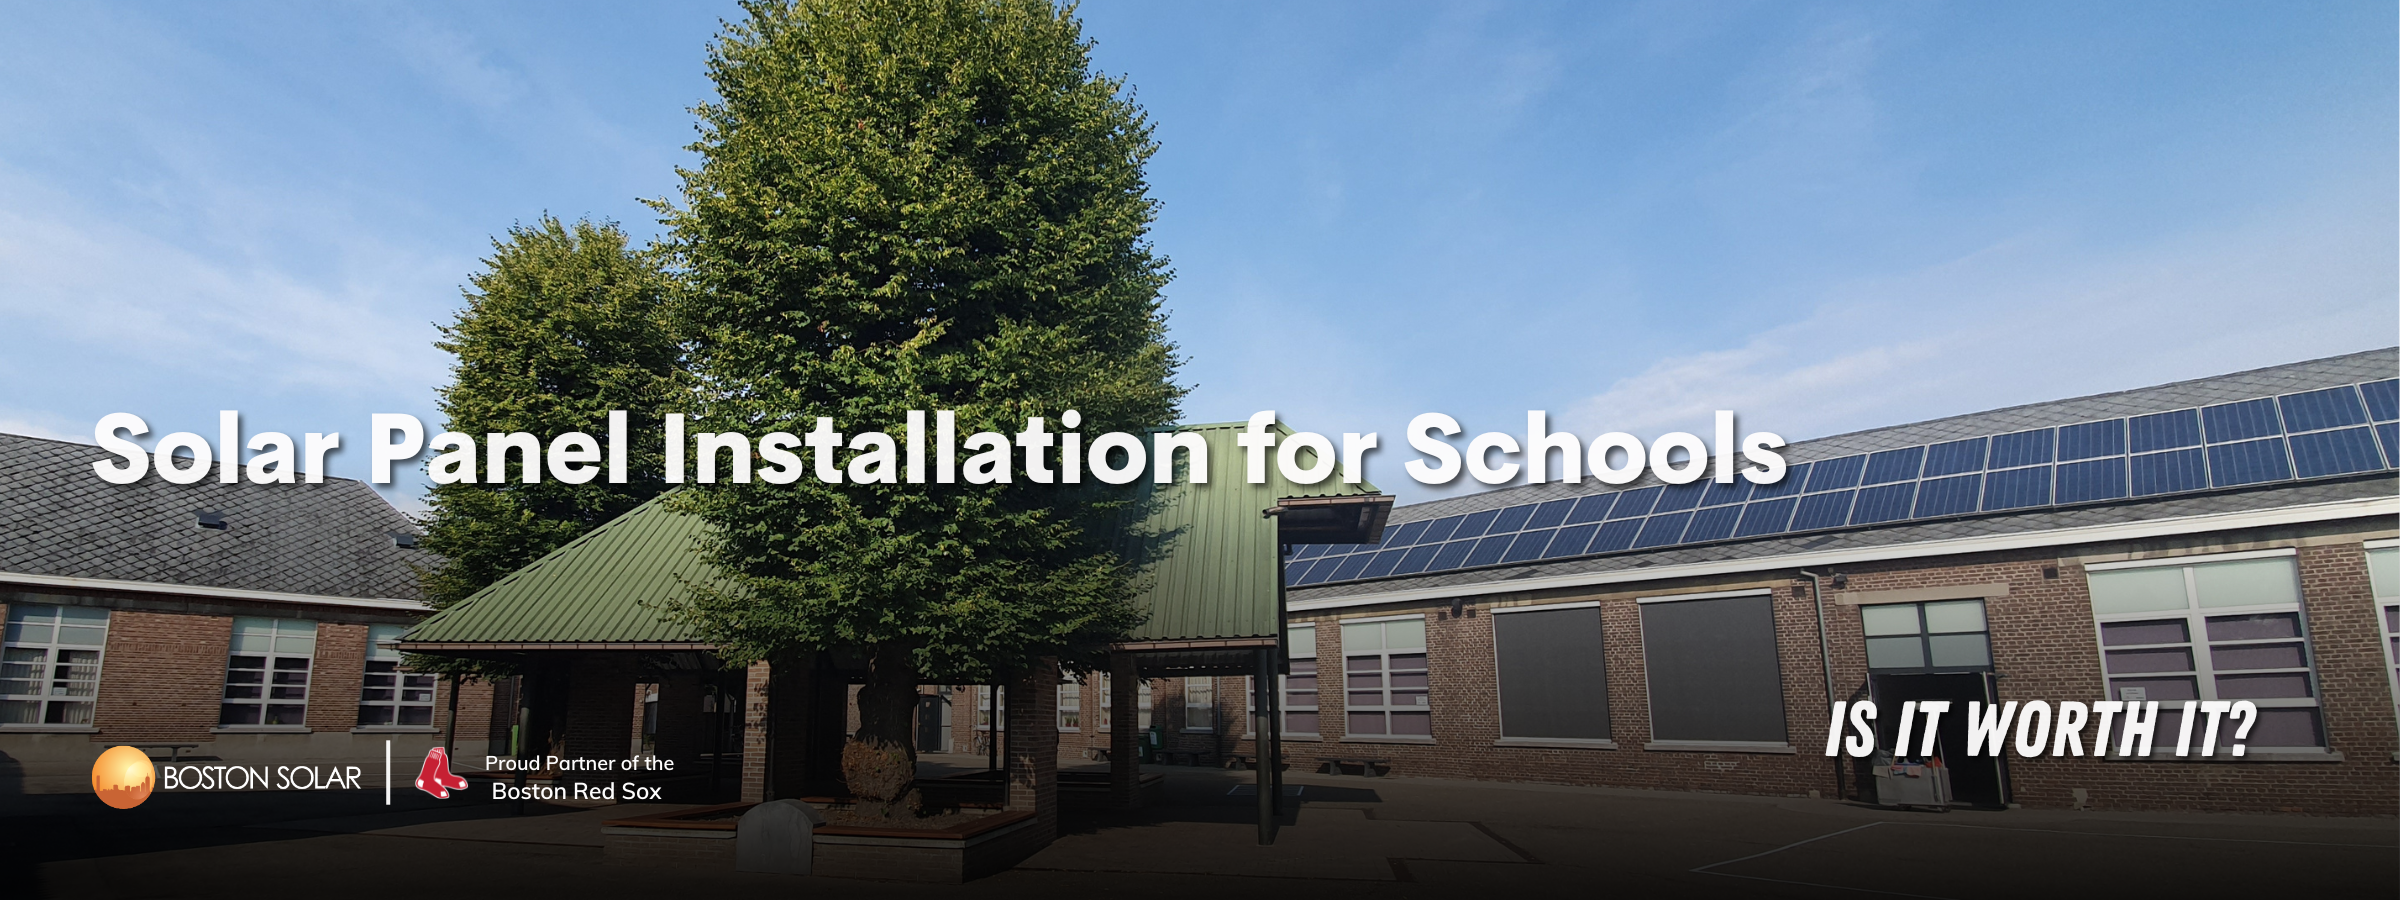 Solar Panel Installation for Schools: Is It Worth It?